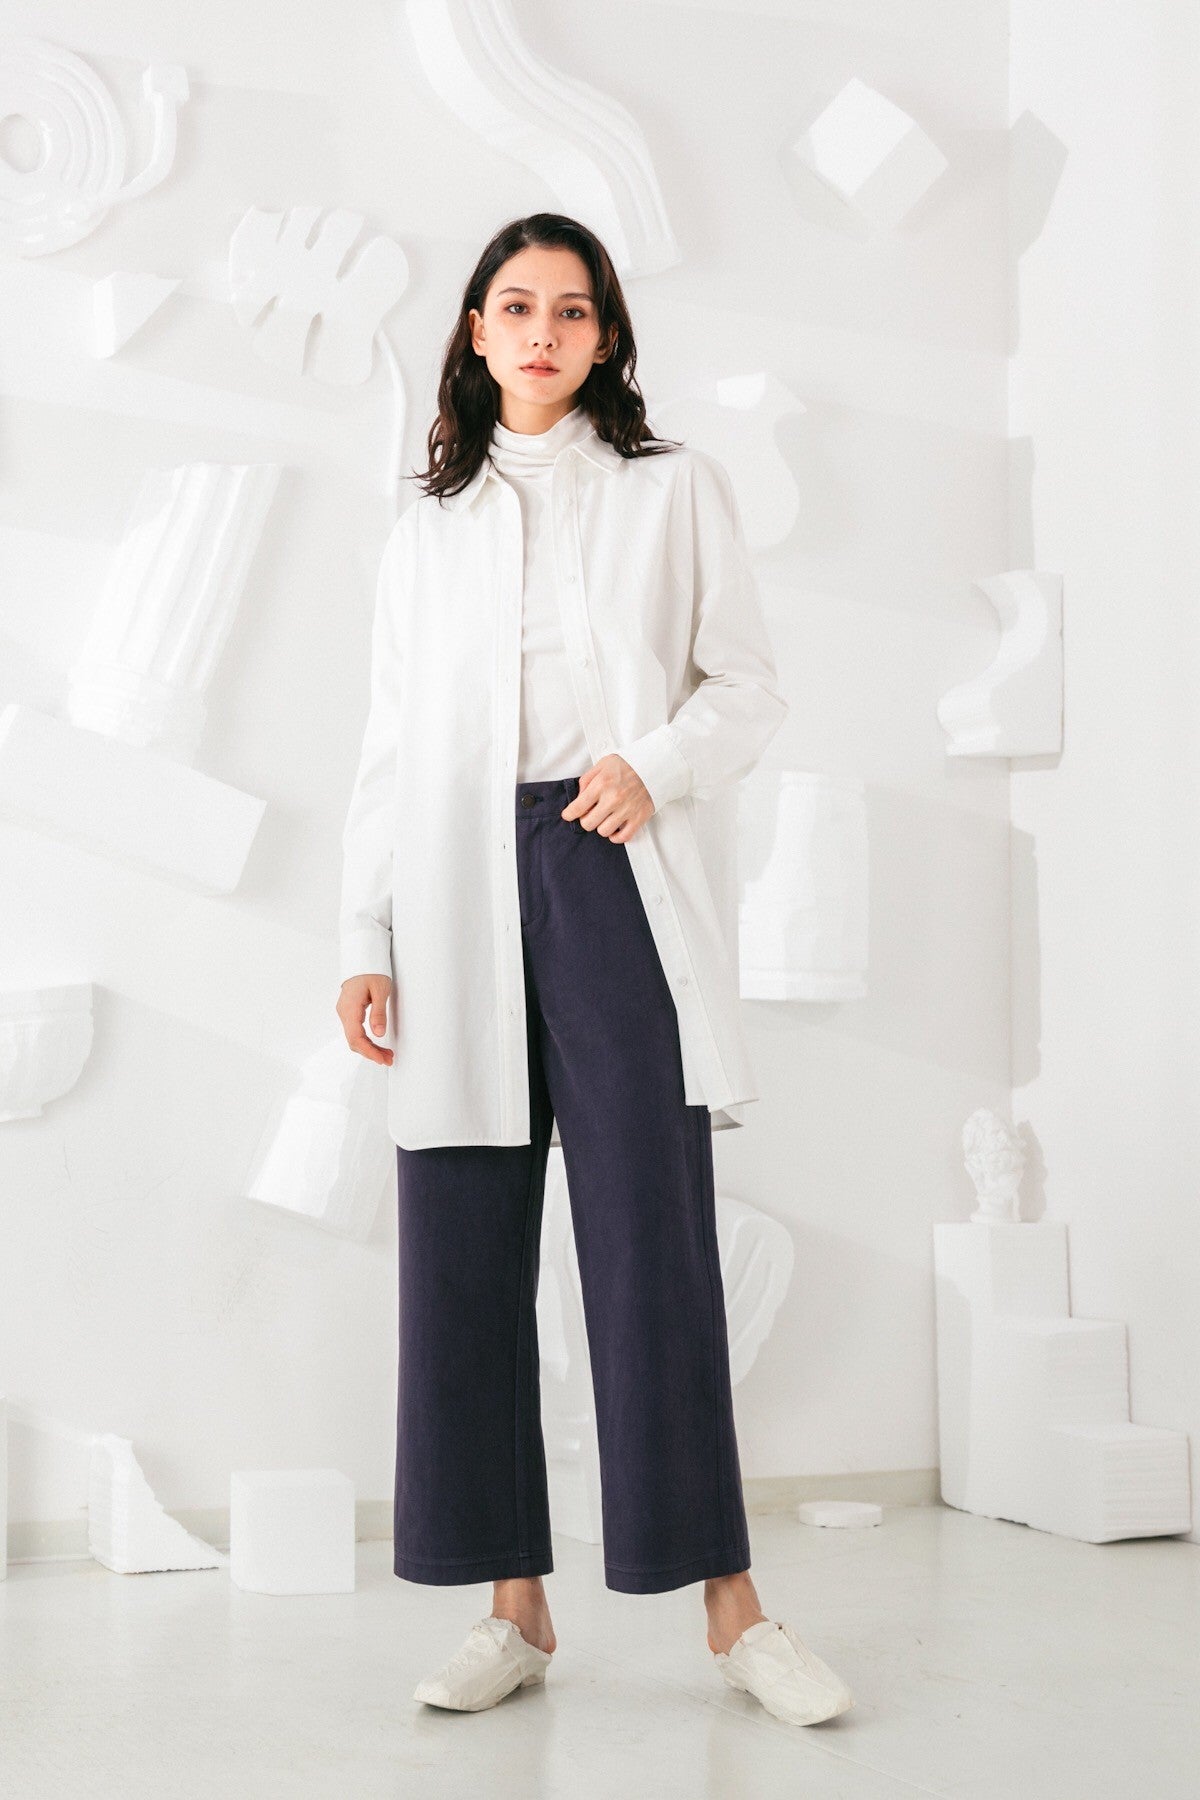 SKYE San Francisco SF shop ethical modern minimalist quality women clothing fashion Brigitte Tunic Shirt white 2